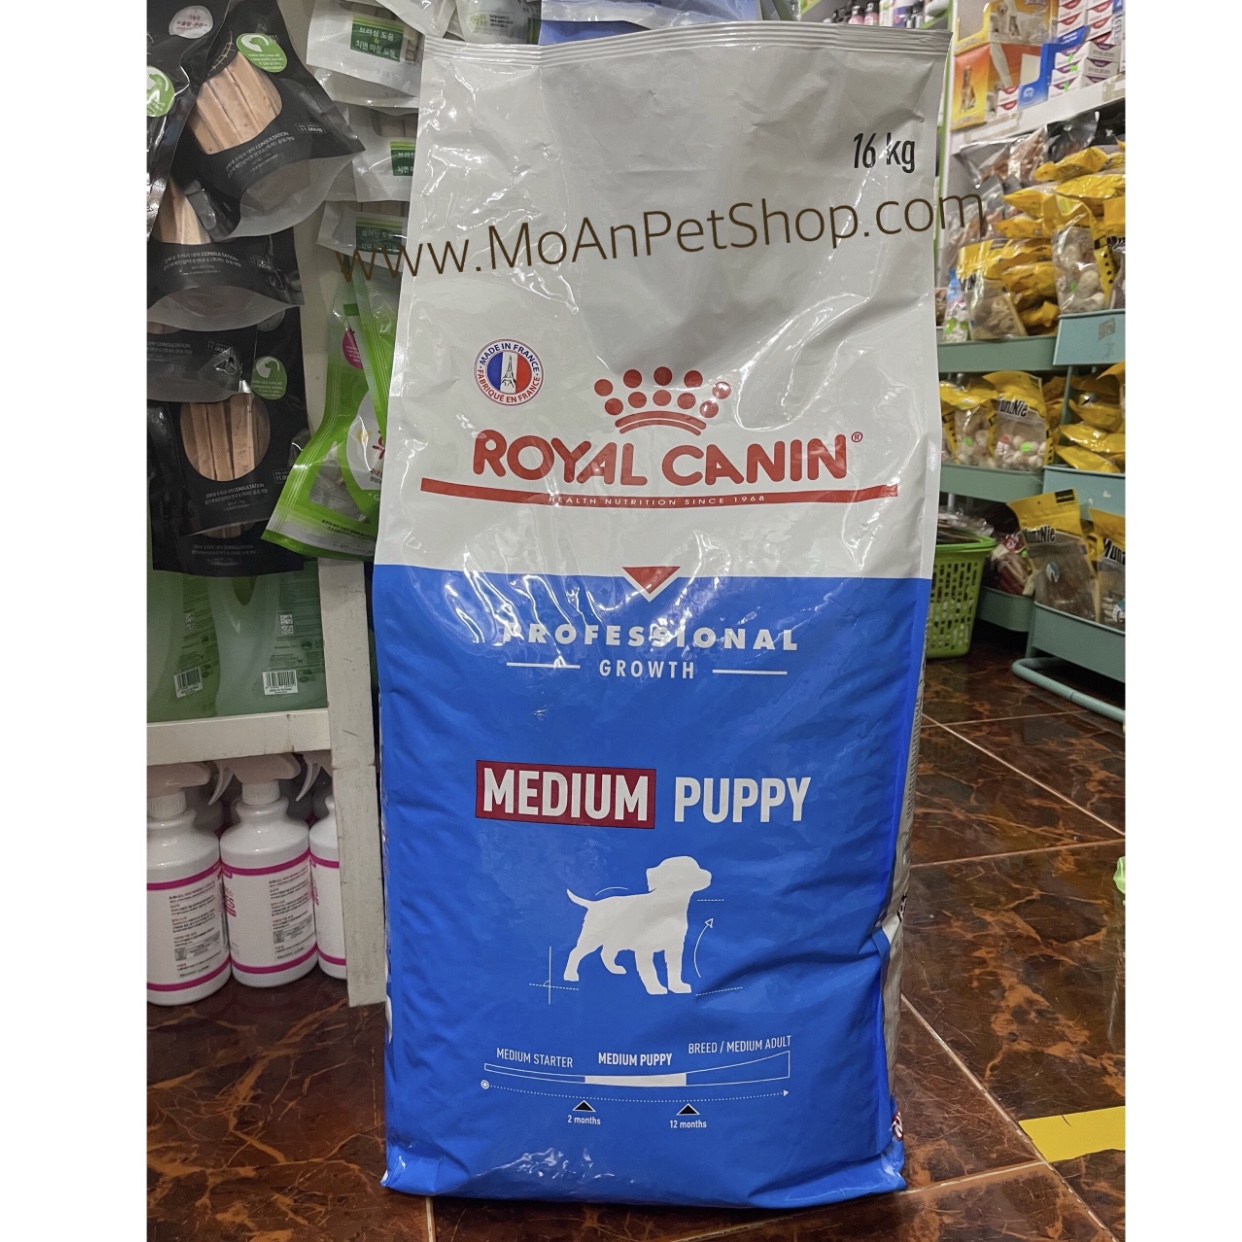 ROYAL CANIN MEDIUM PUPPY 16kg.